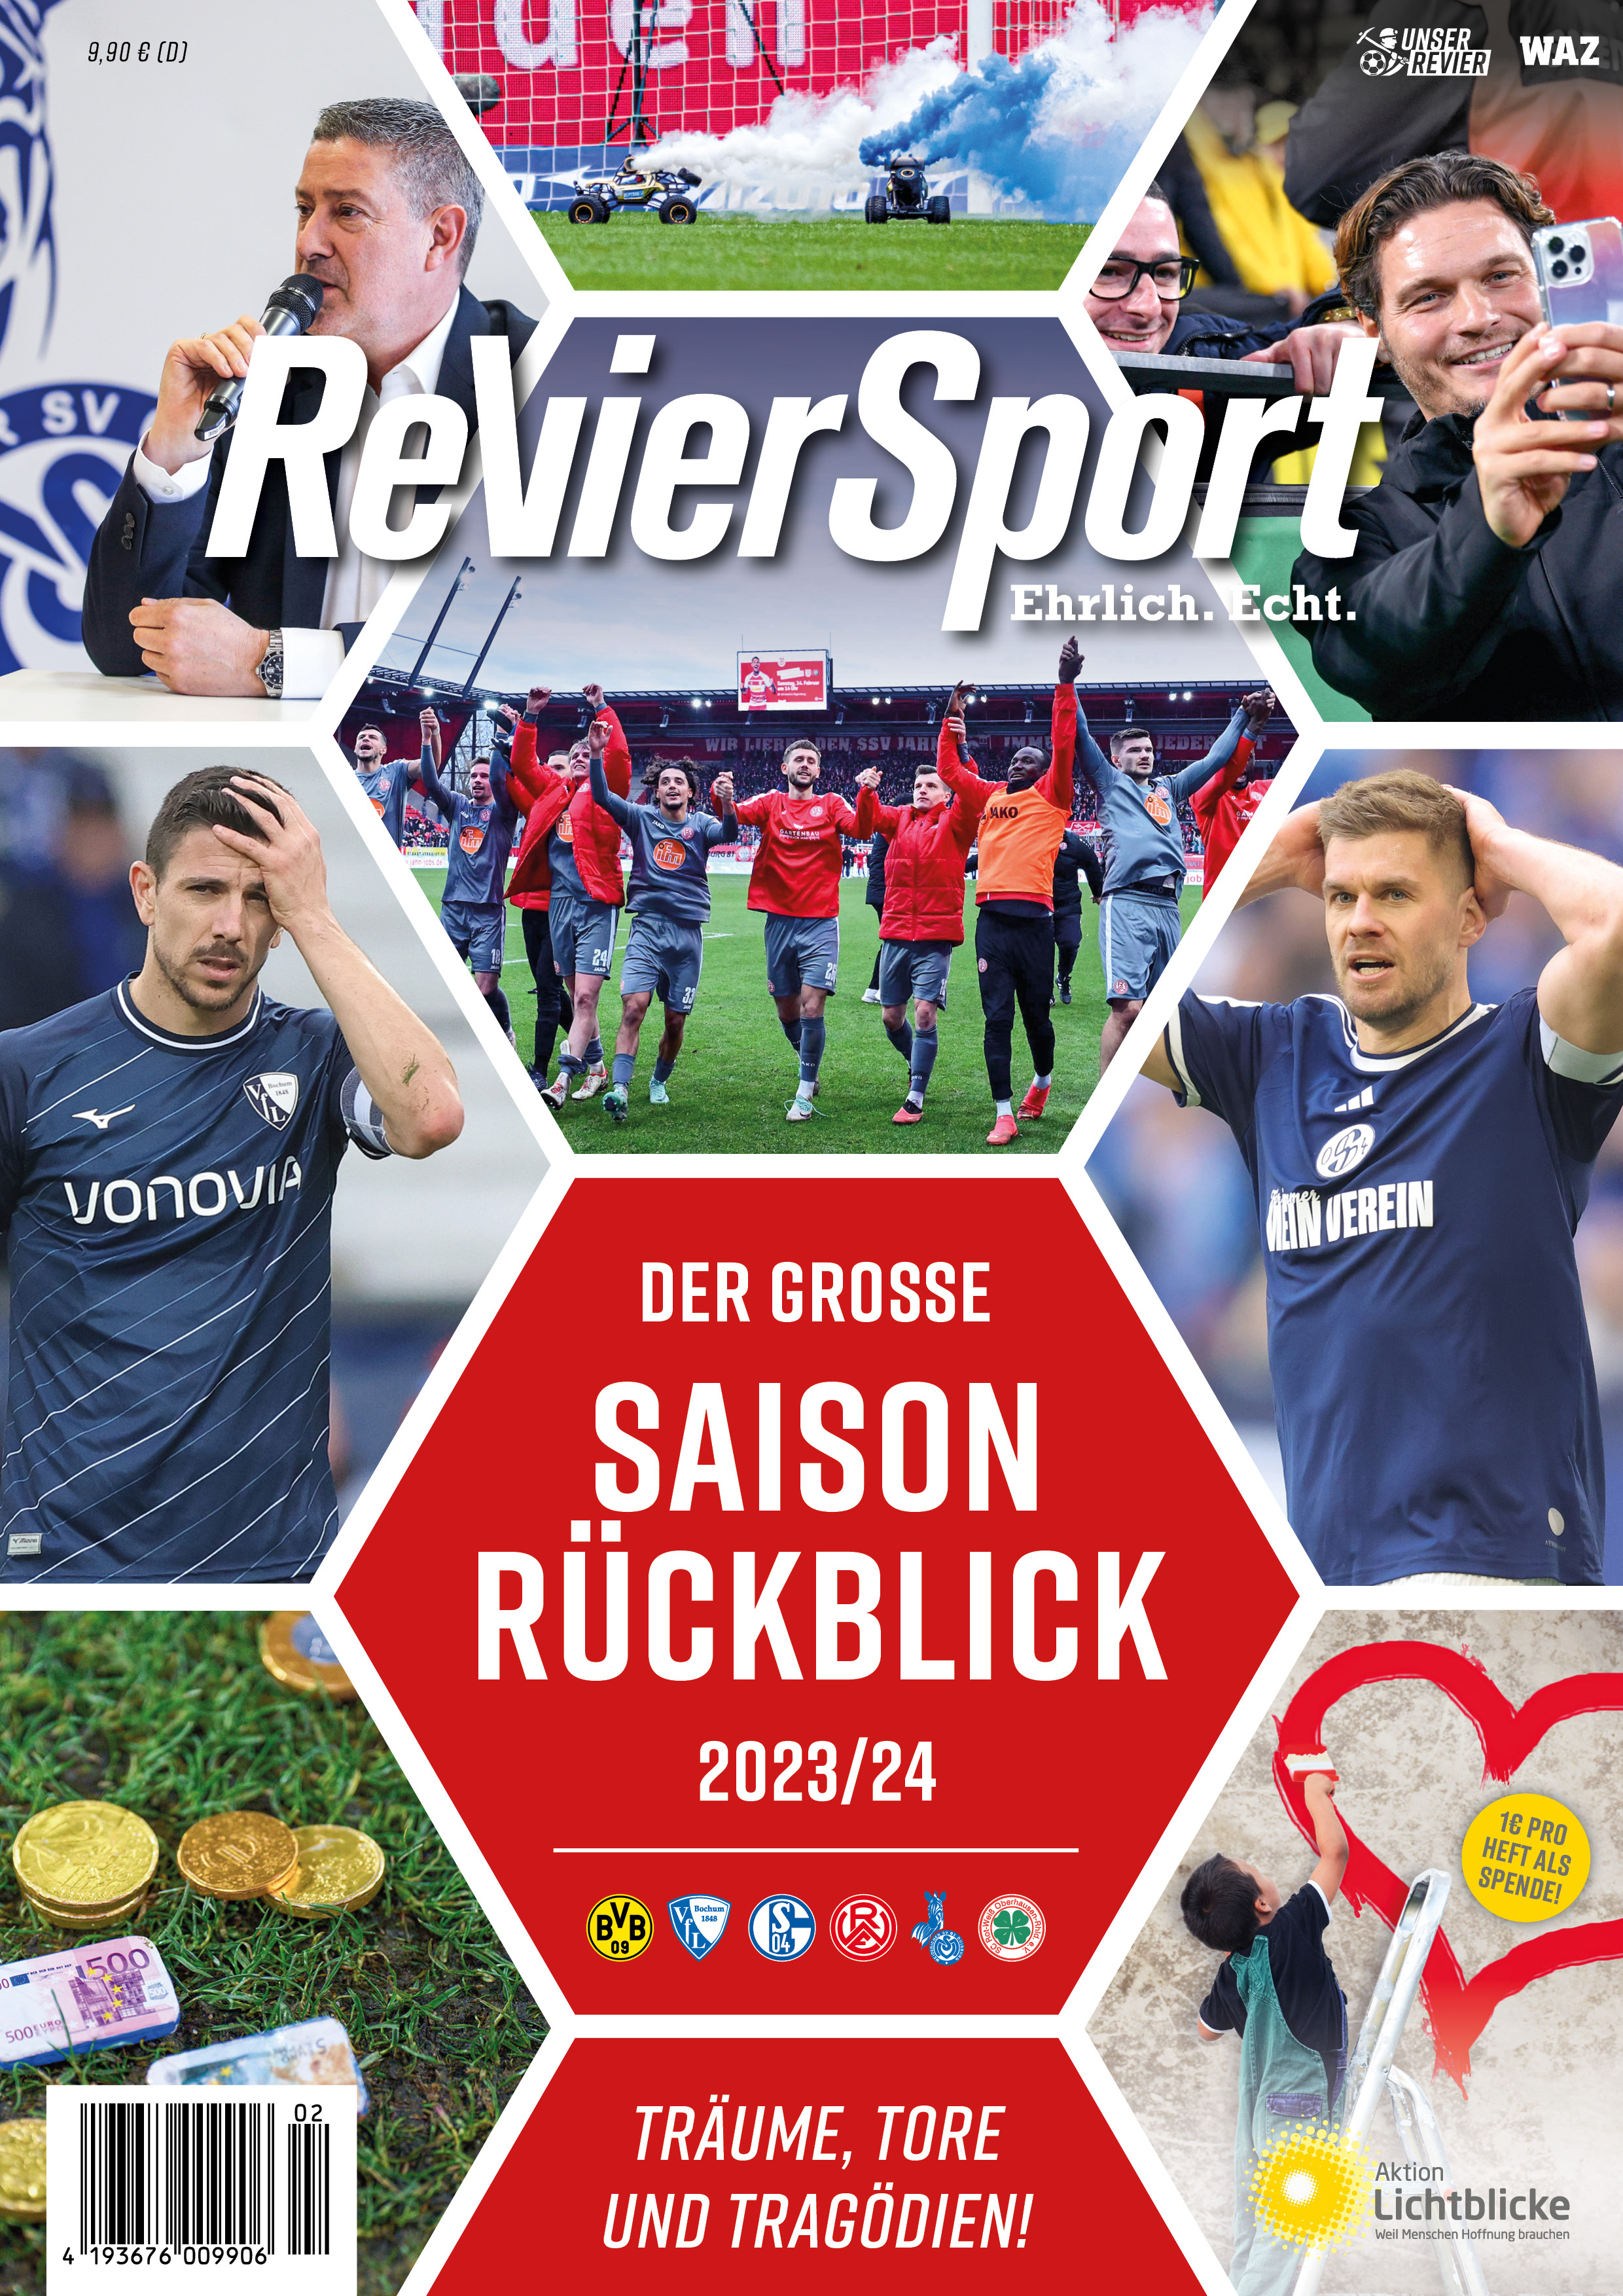 Der große RevierSport-Saisonrückblick 2023/24
(Versand erfolgt ab 06.06.2024)